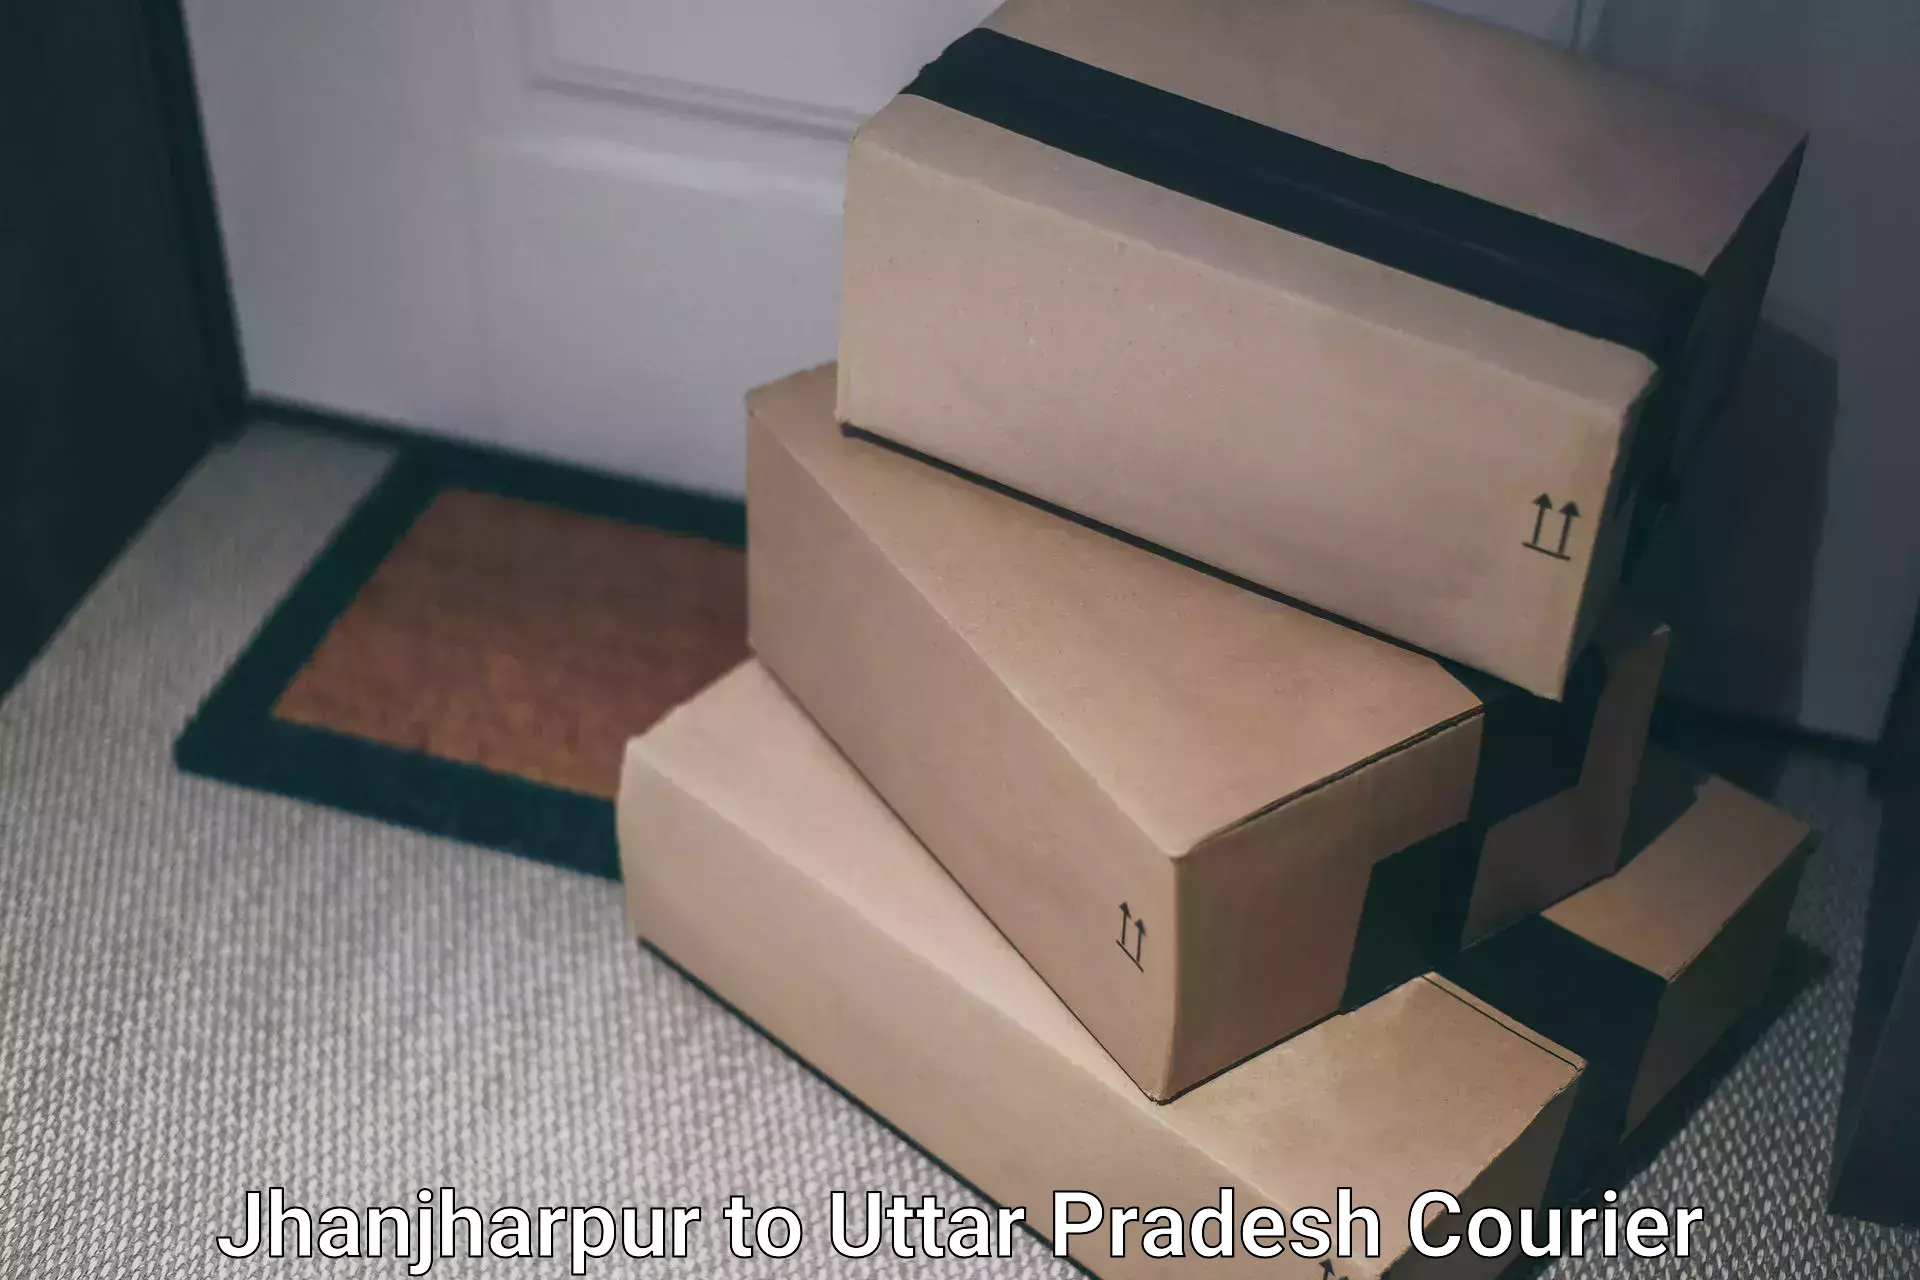 Efficient parcel tracking Jhanjharpur to Ganj Dundwara